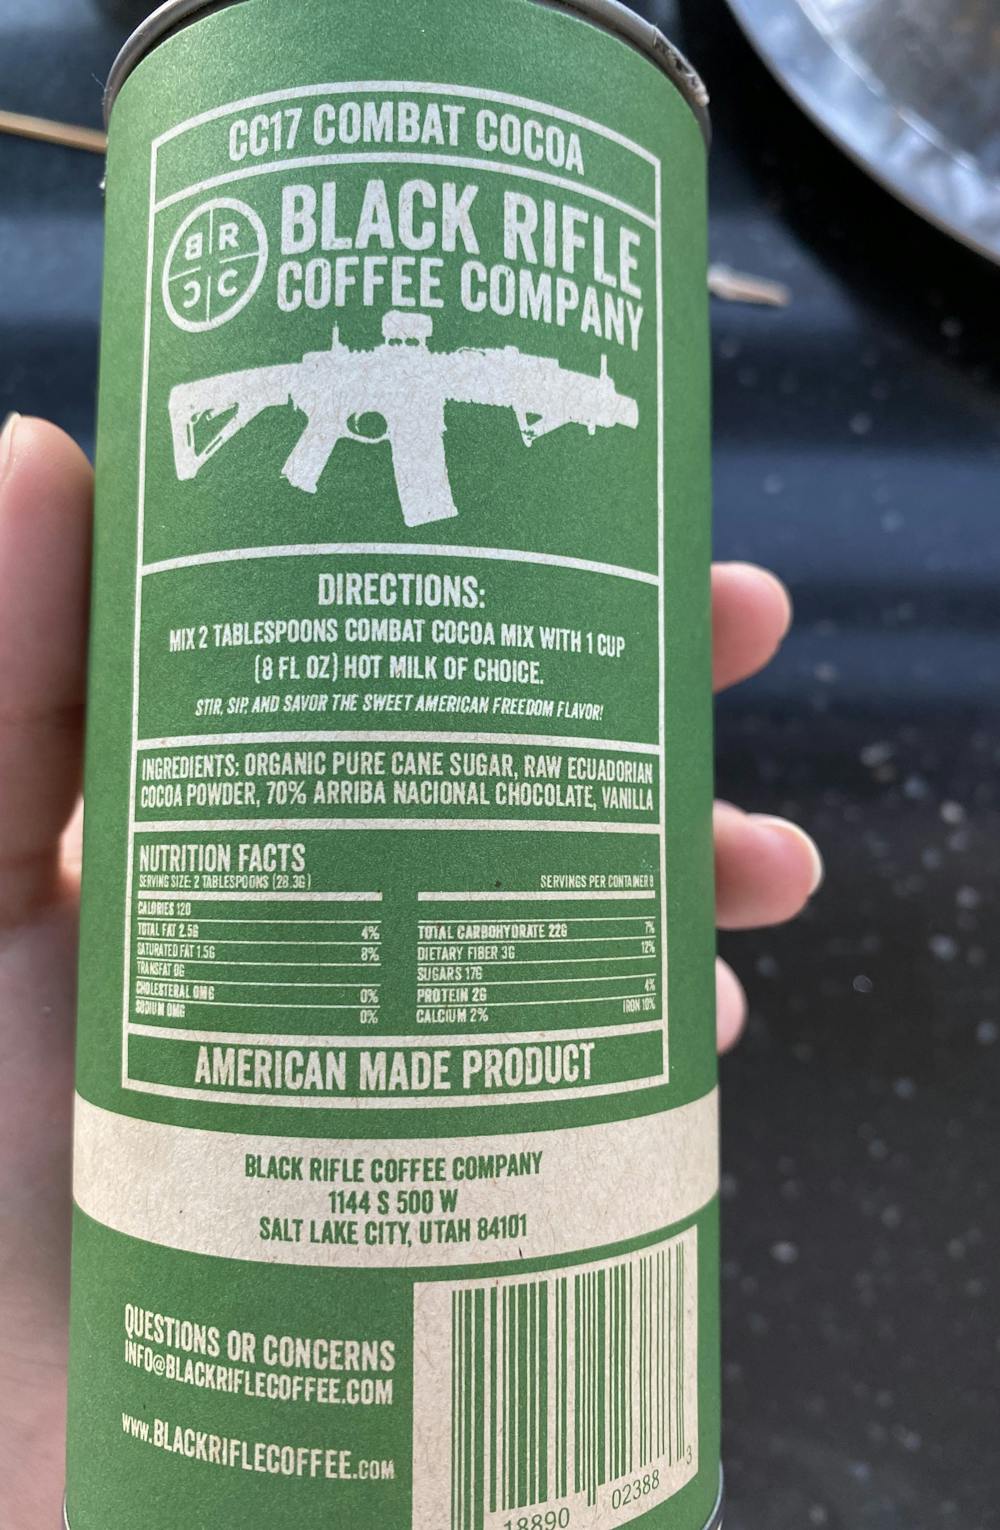 Ingredienslisten til Black rifle coffee company Combat cocoa